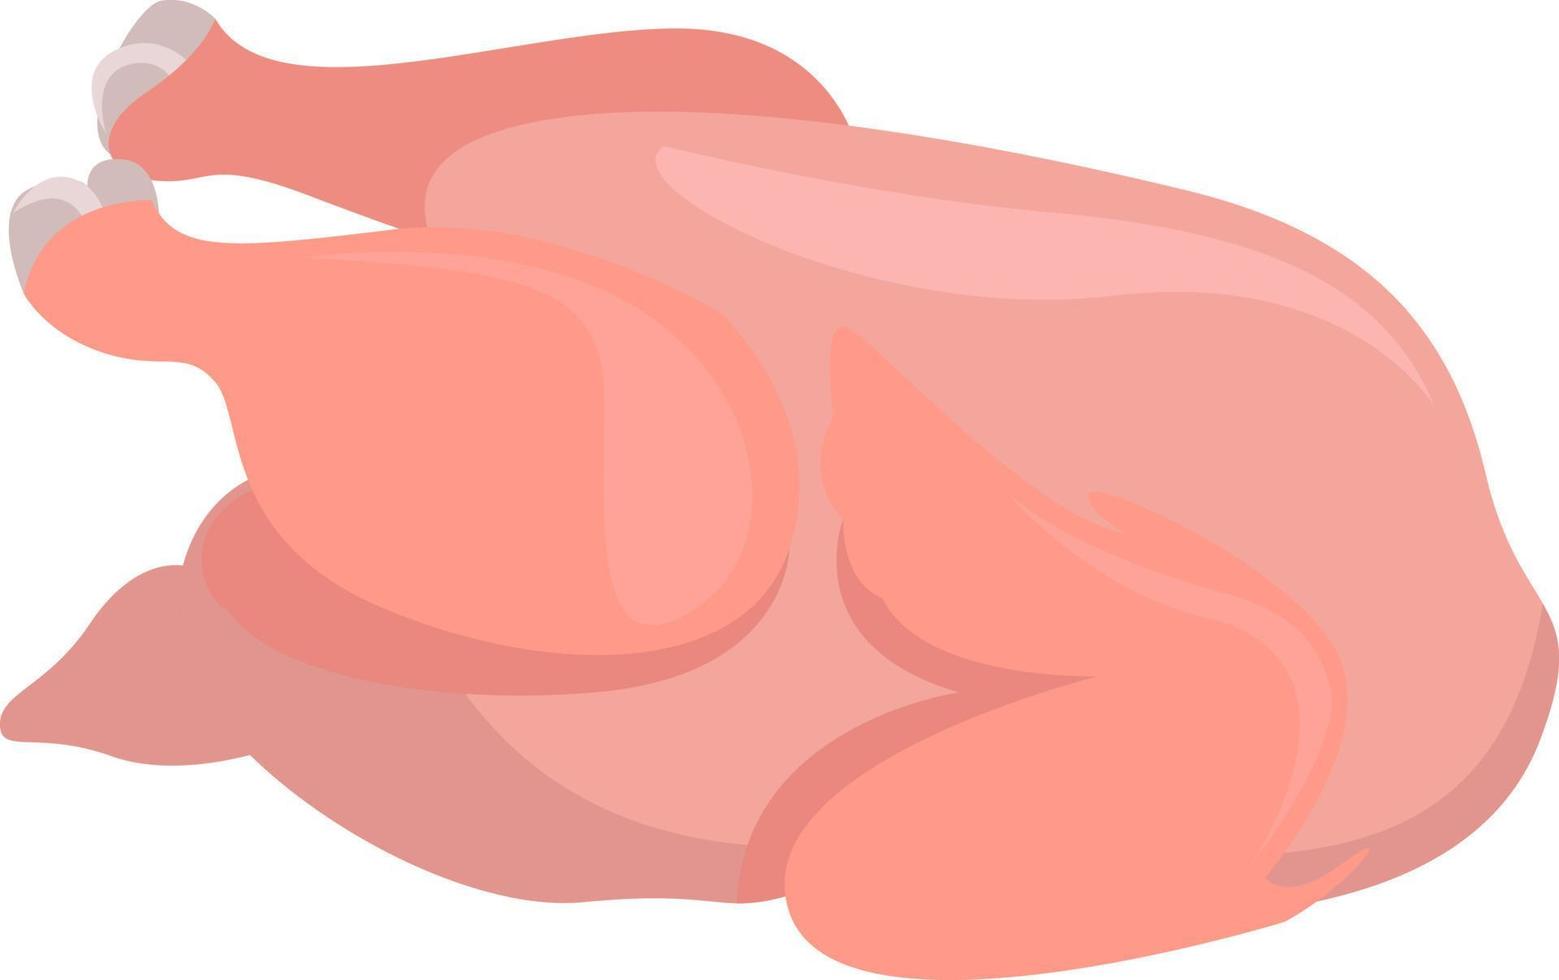 Raw chicken , illustration, vector on white background